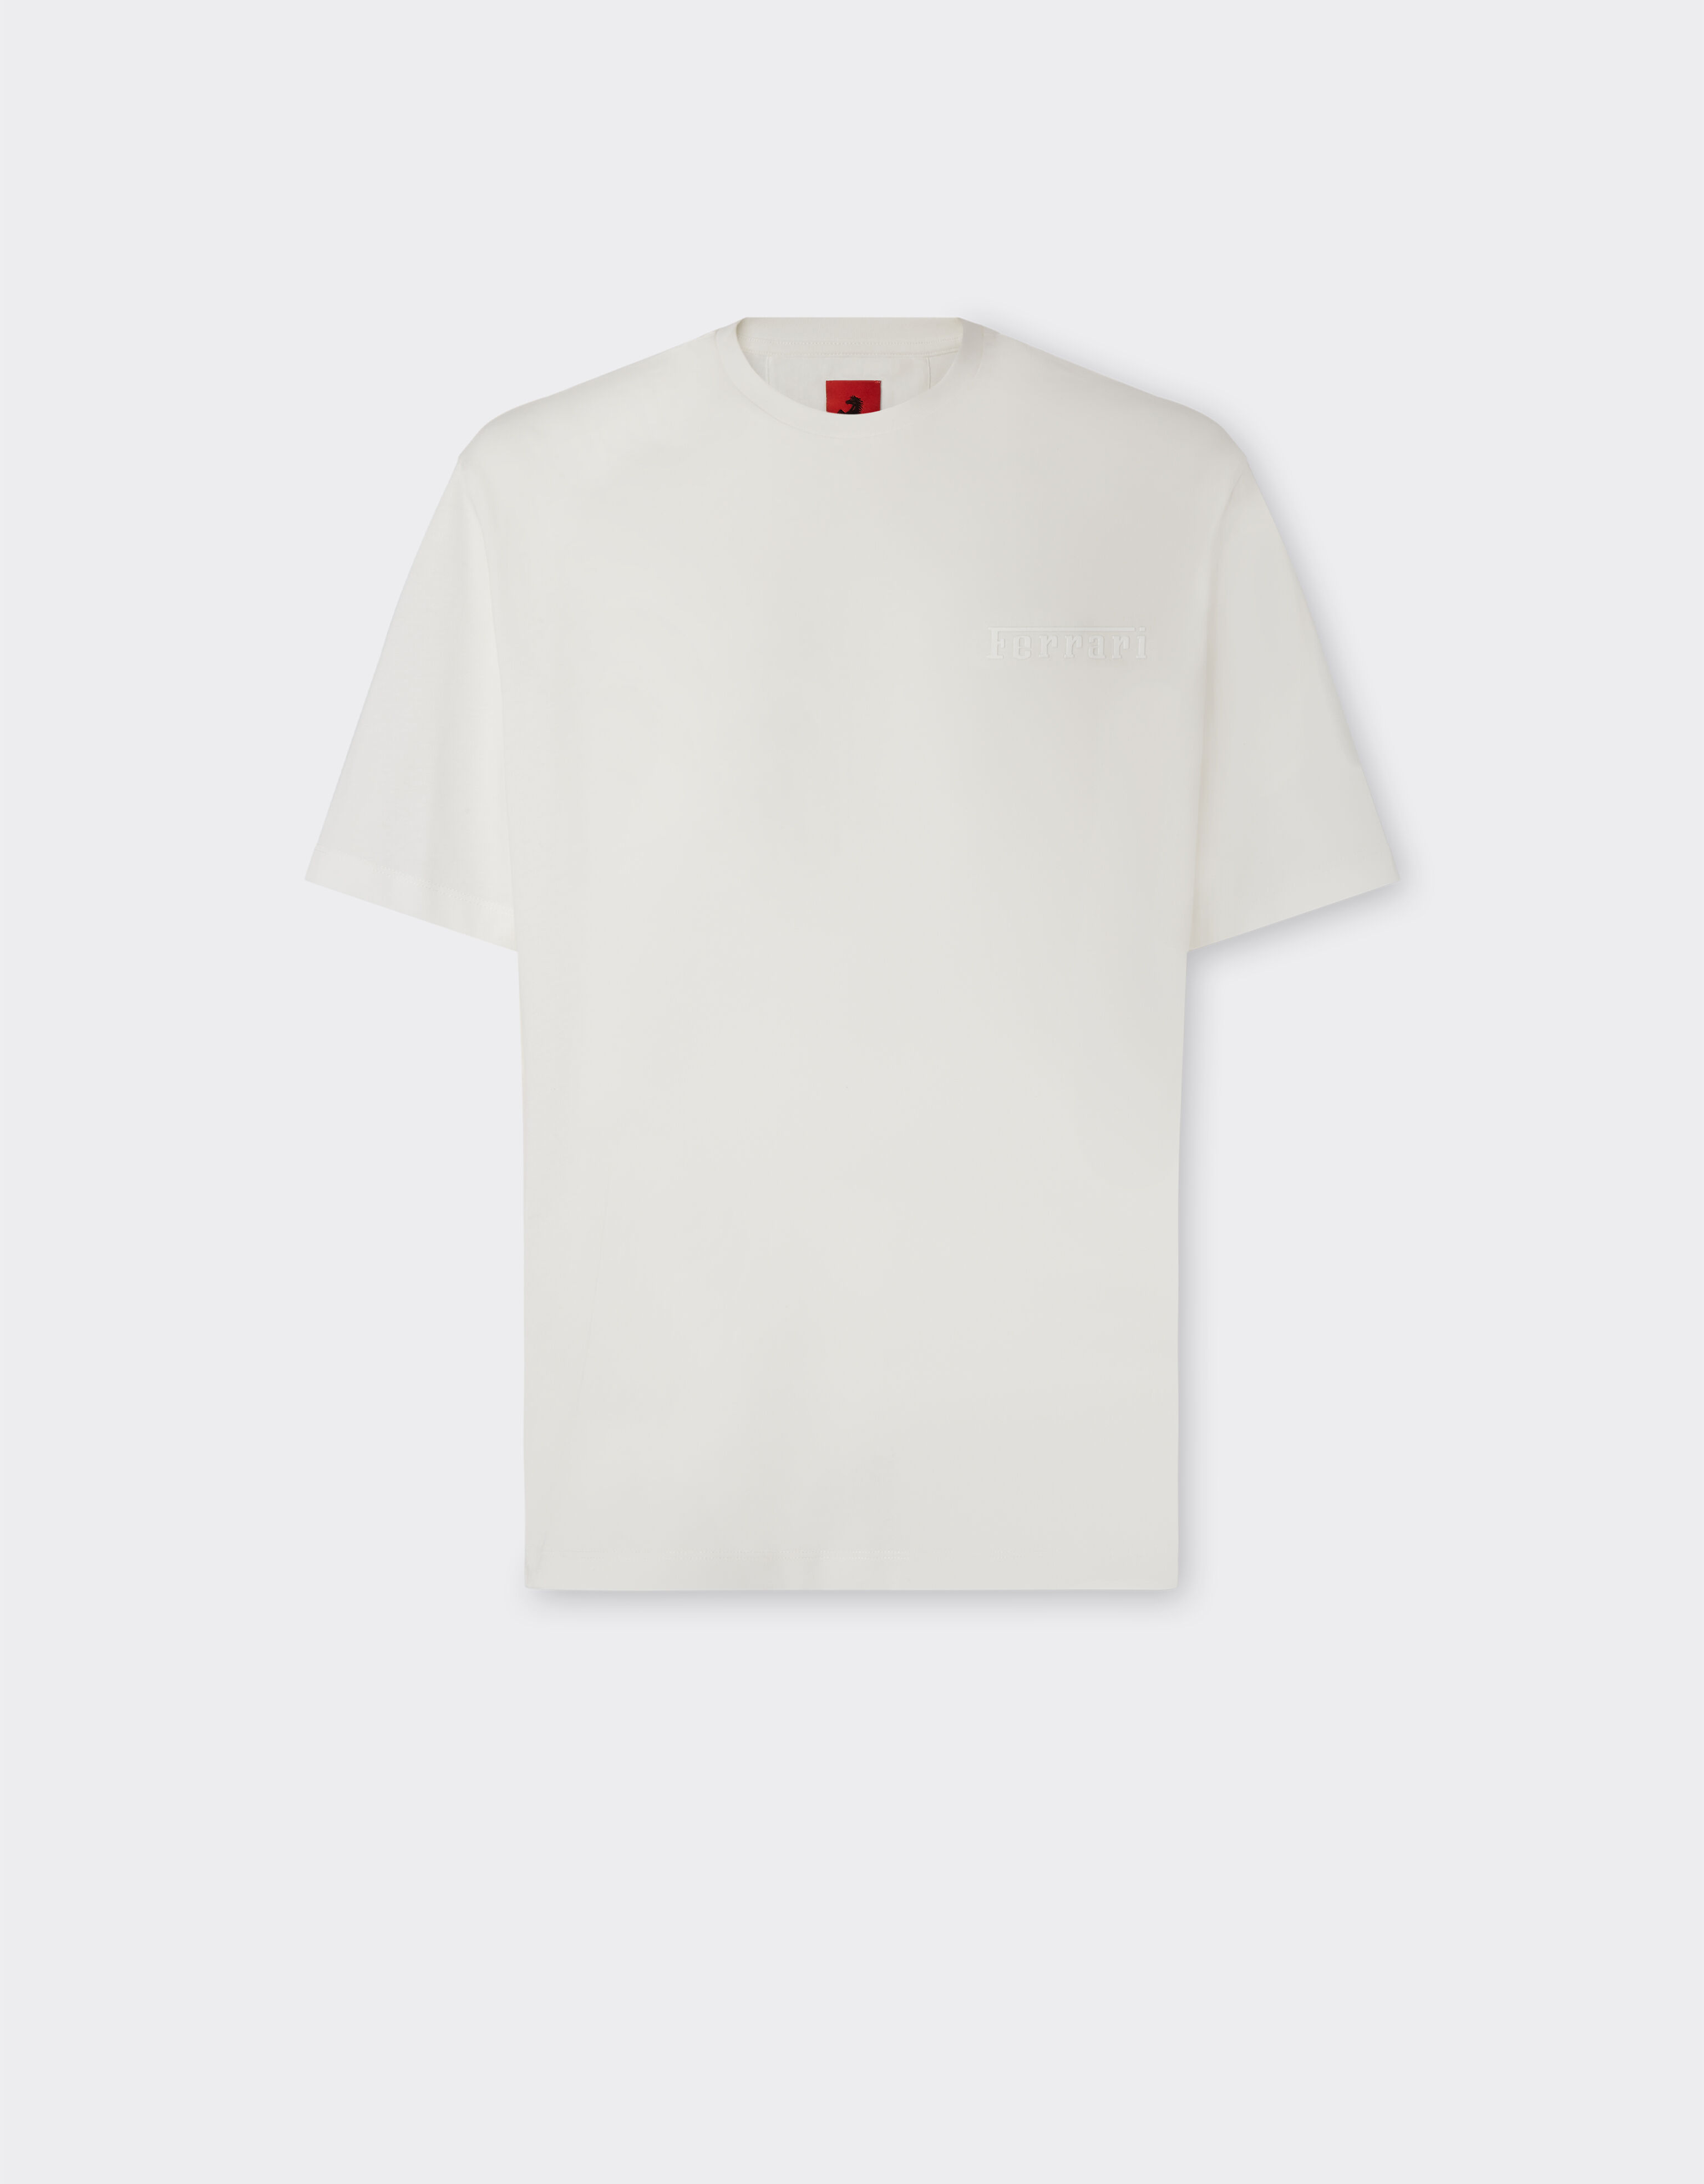 Ferrari Cotton T-shirt with Ferrari logo Burgundy 21135f